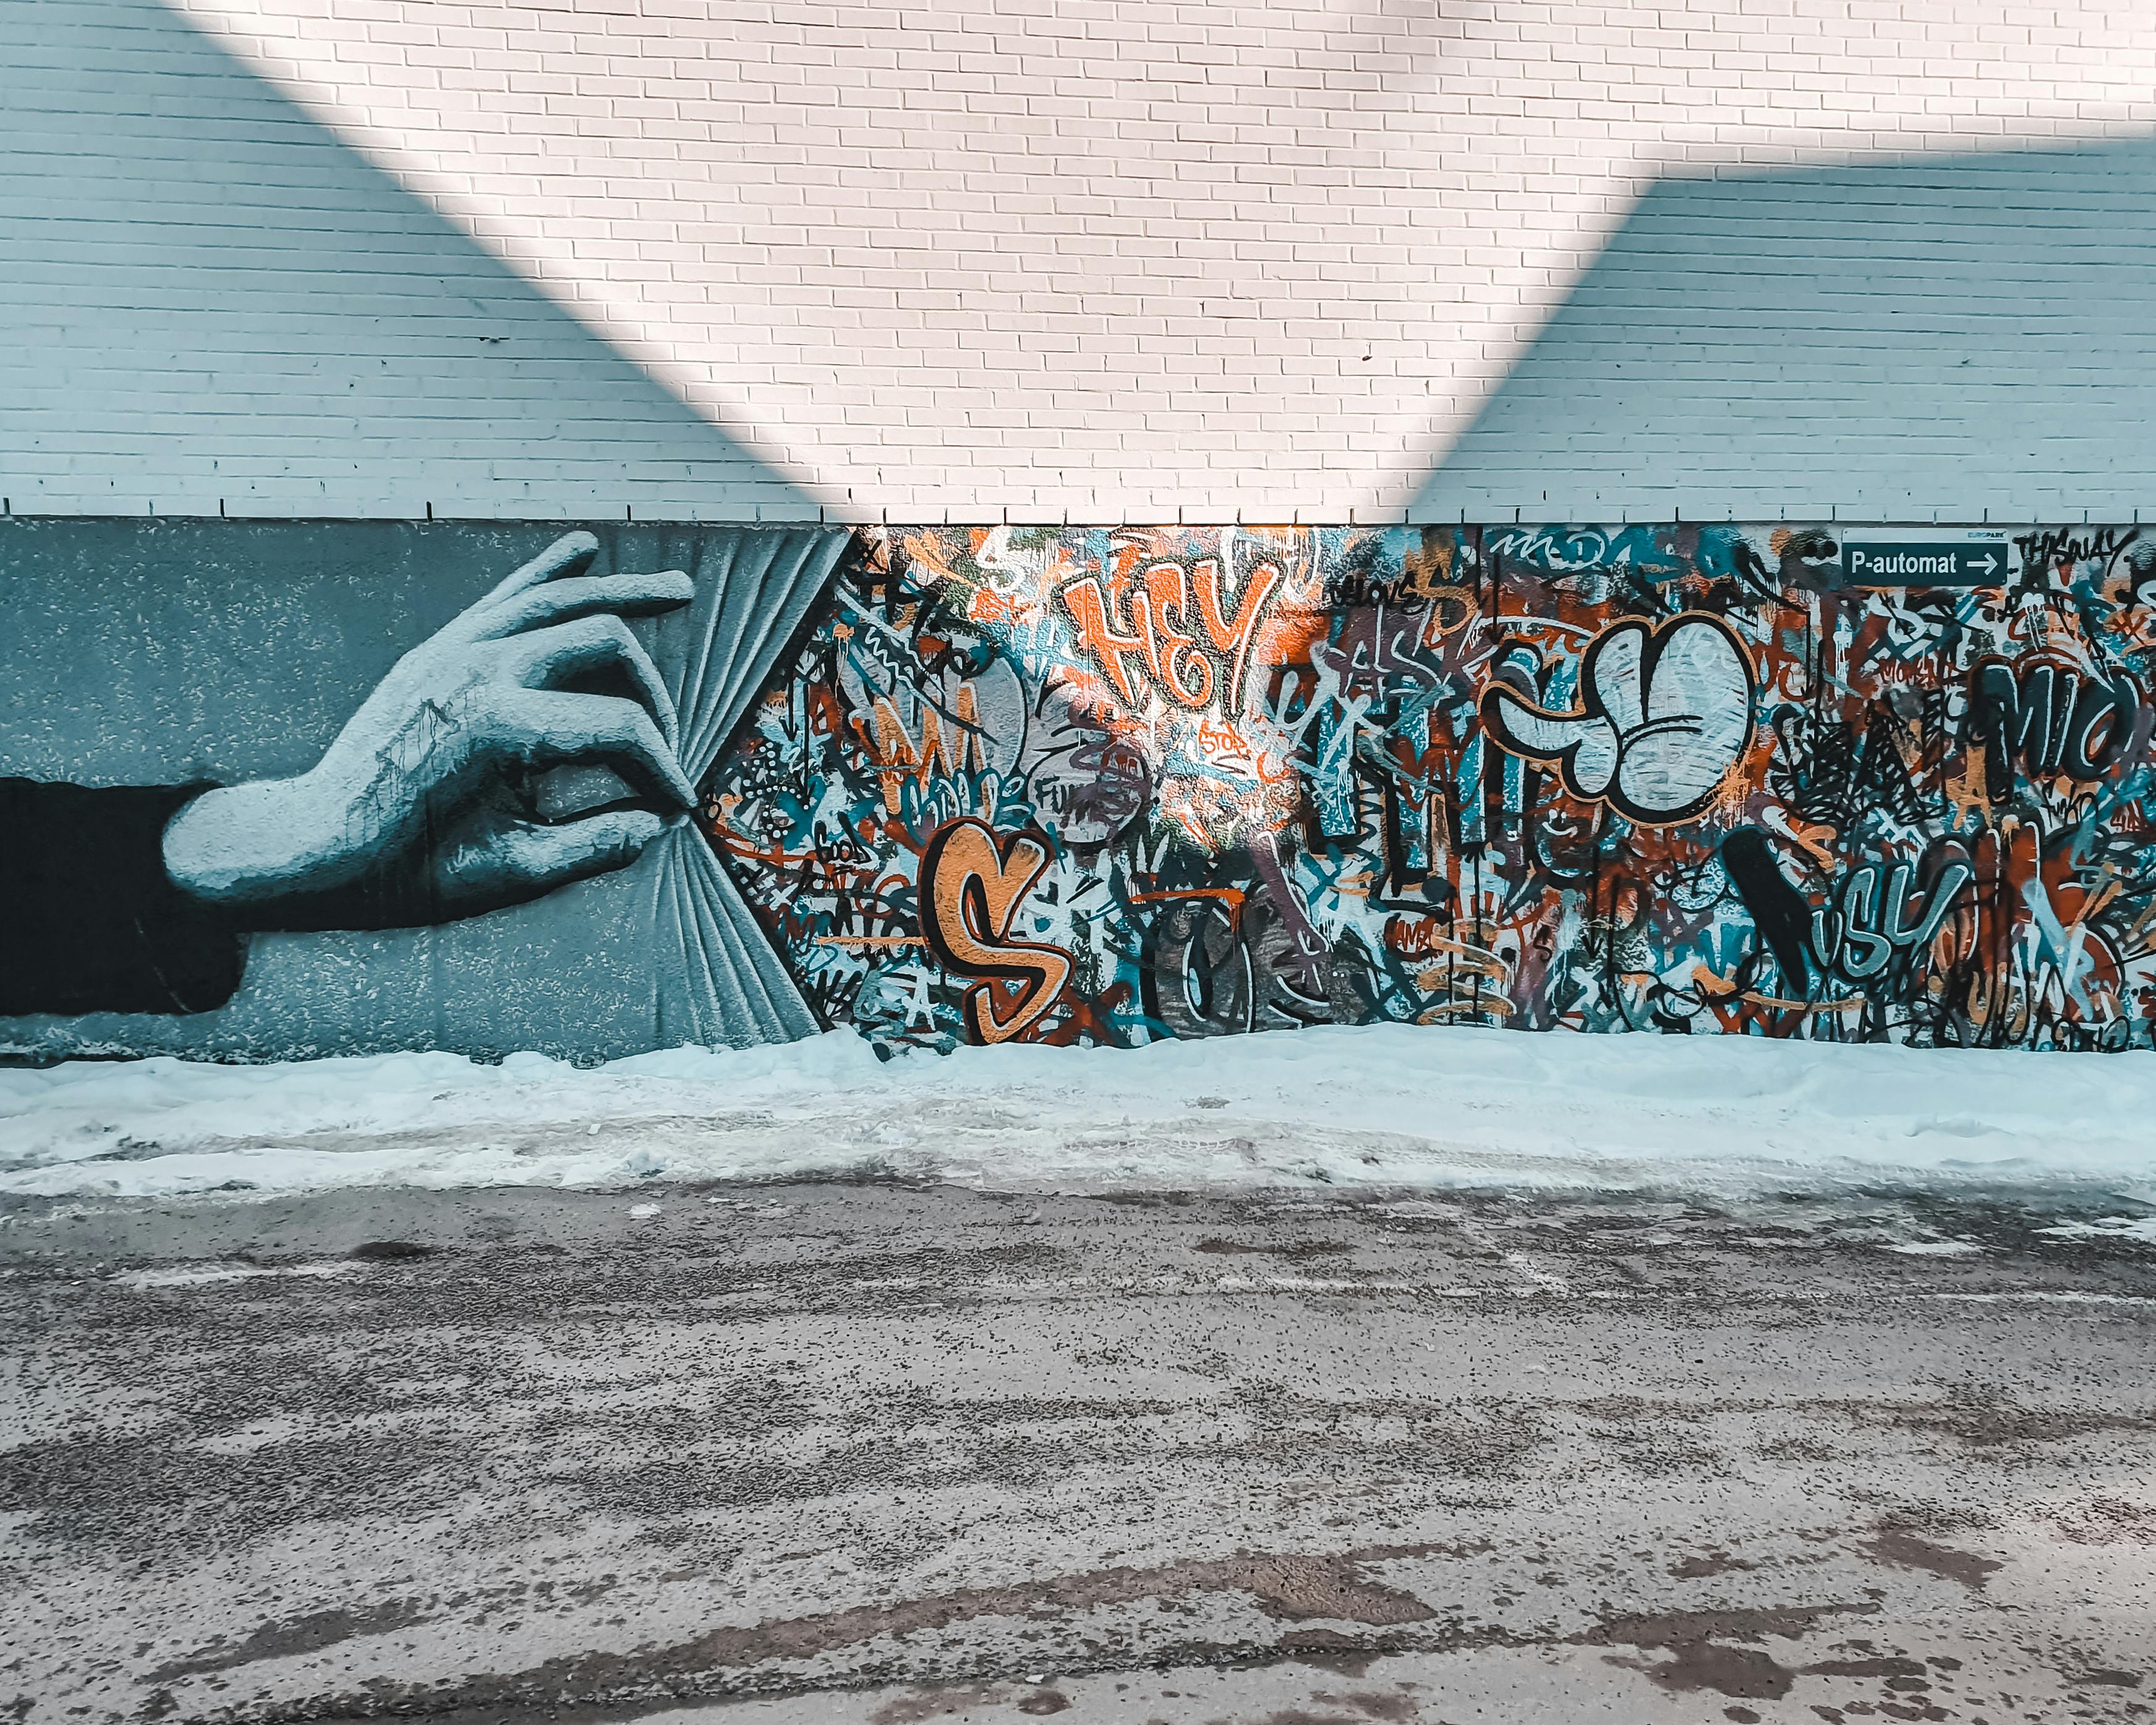 HD Graffiti Wallpapers - Wallpaper Cave